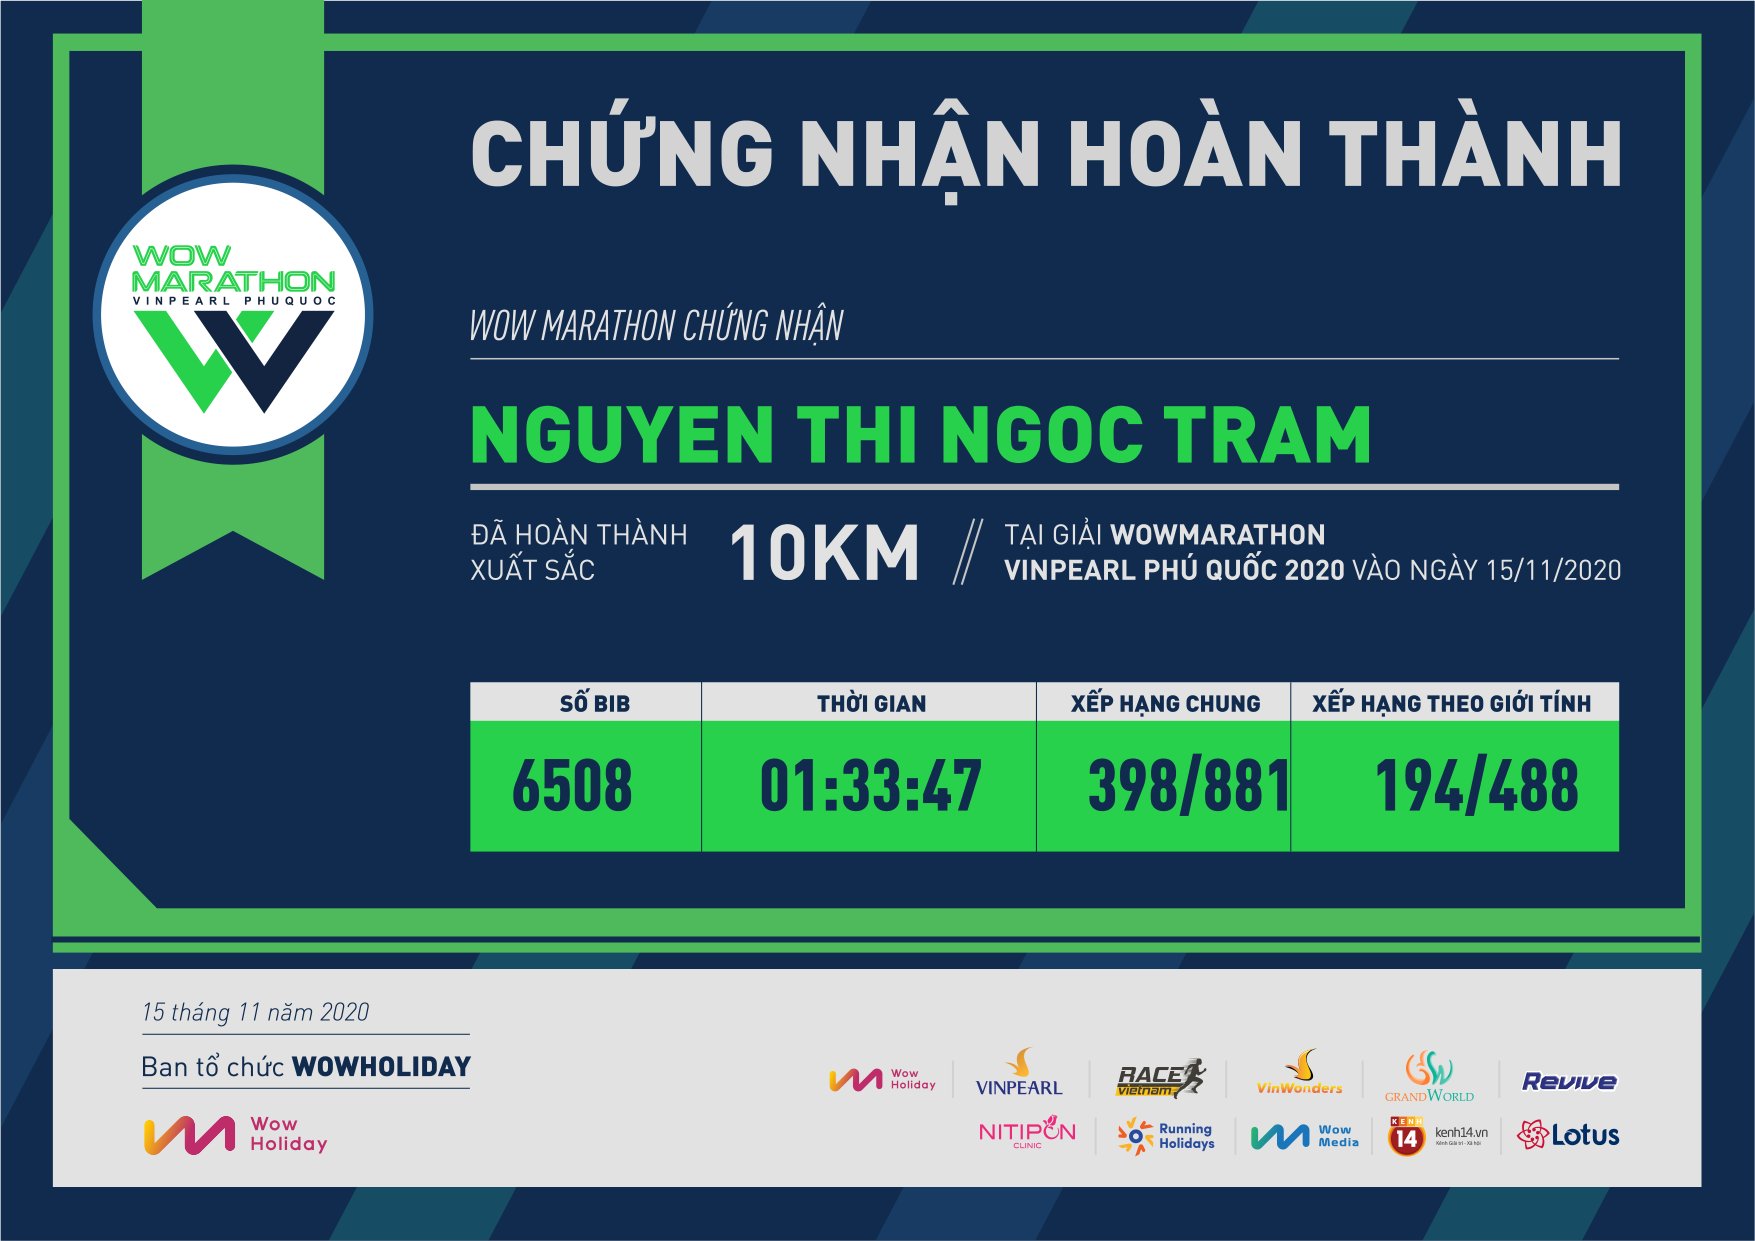 6508 - Nguyen Thi Ngoc Tram